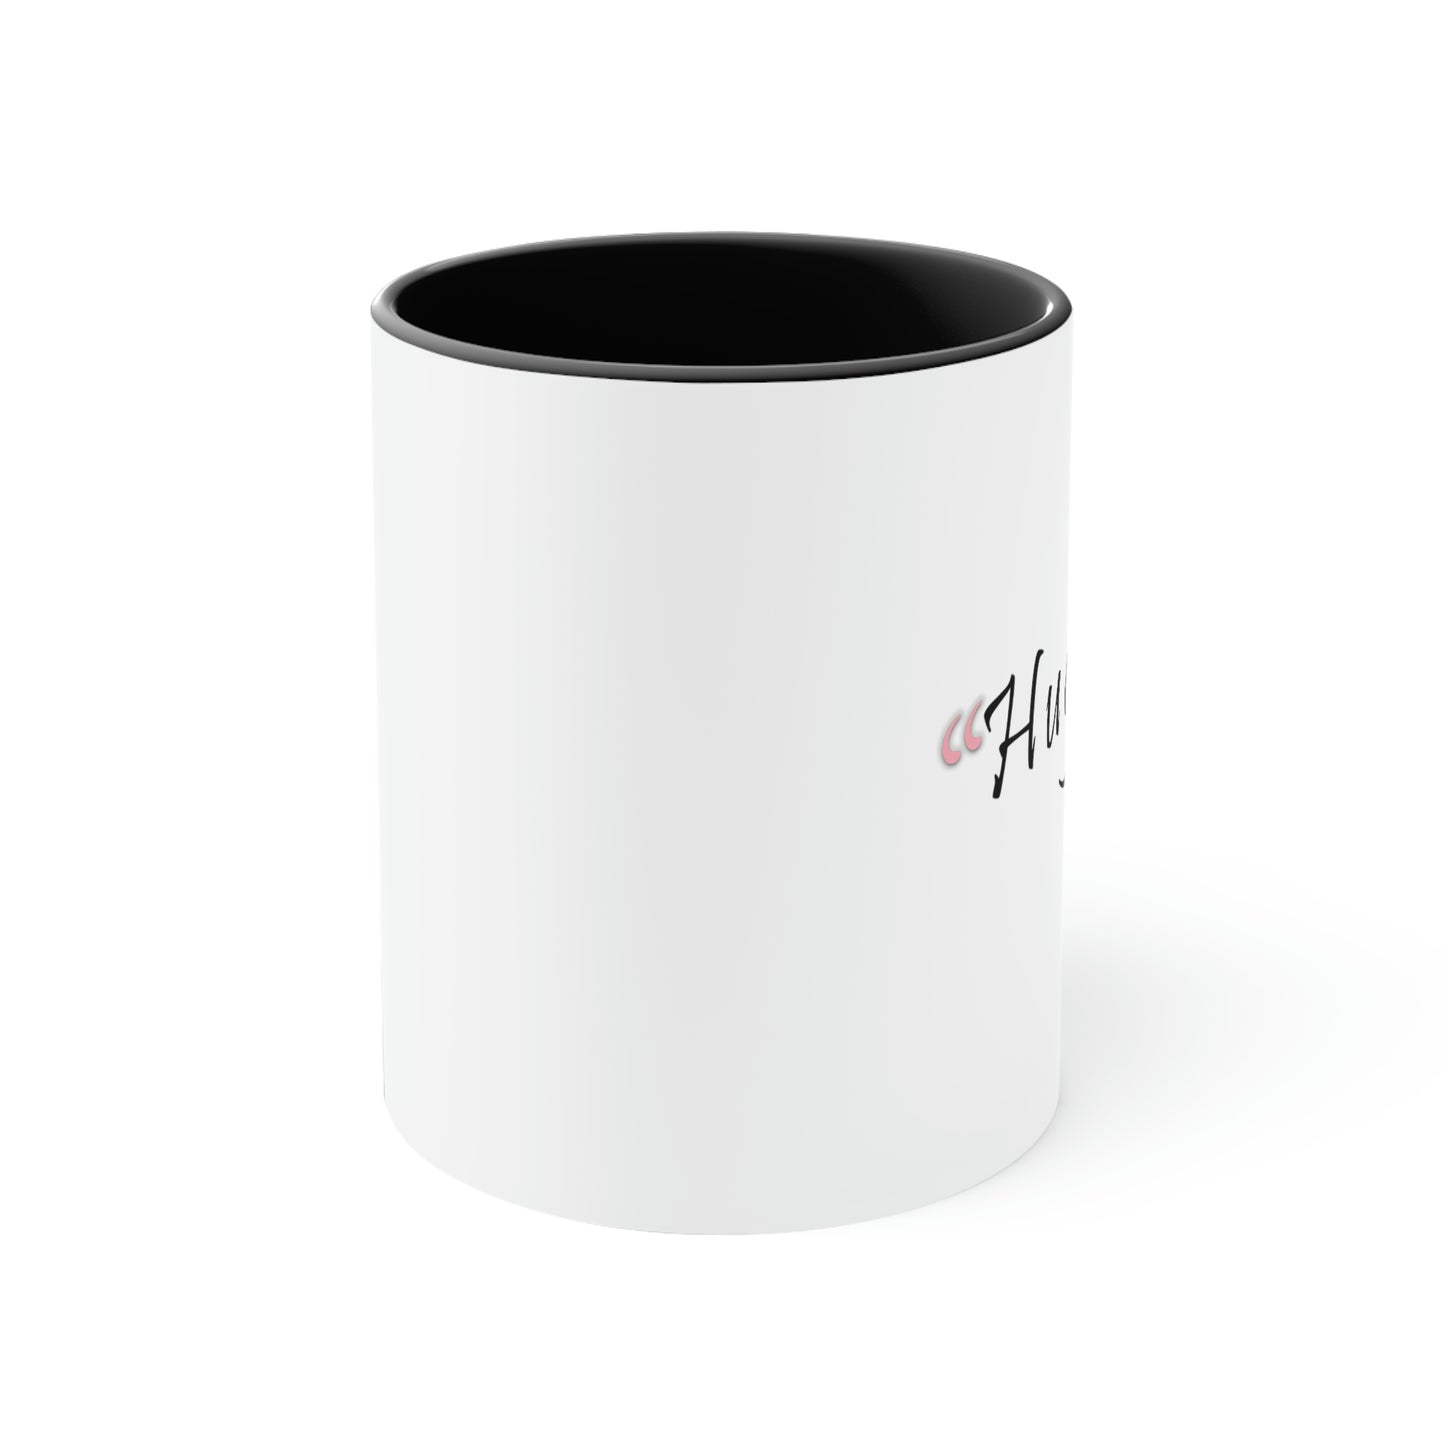 Huggles Coffee Mug, 11oz